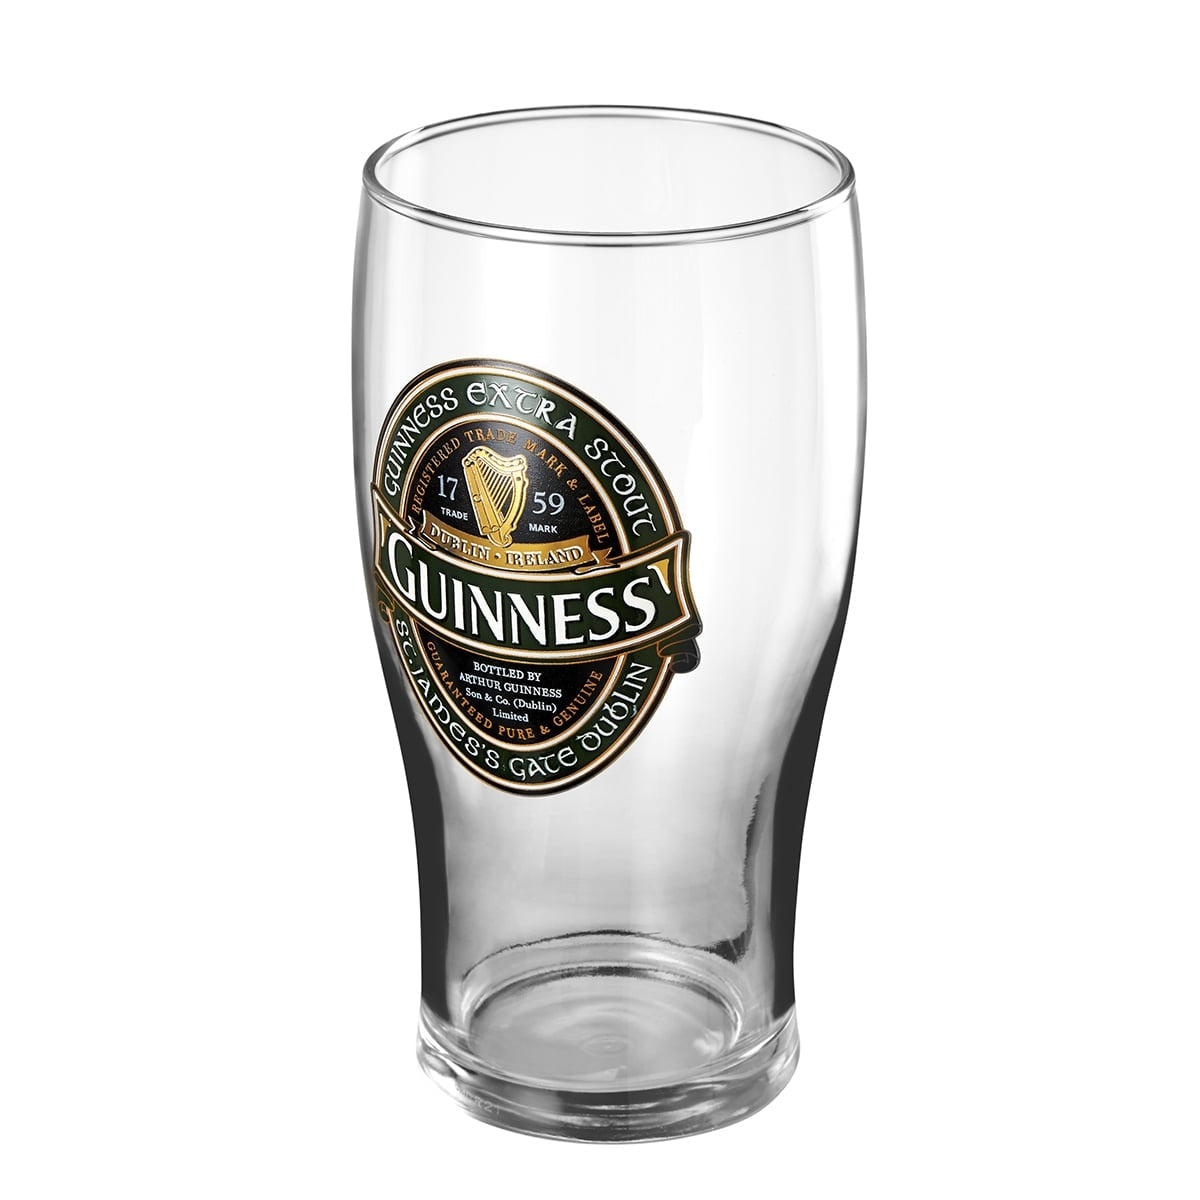 Guinness UK Guinness Ireland Collection Pint Glass - 6 Pack.